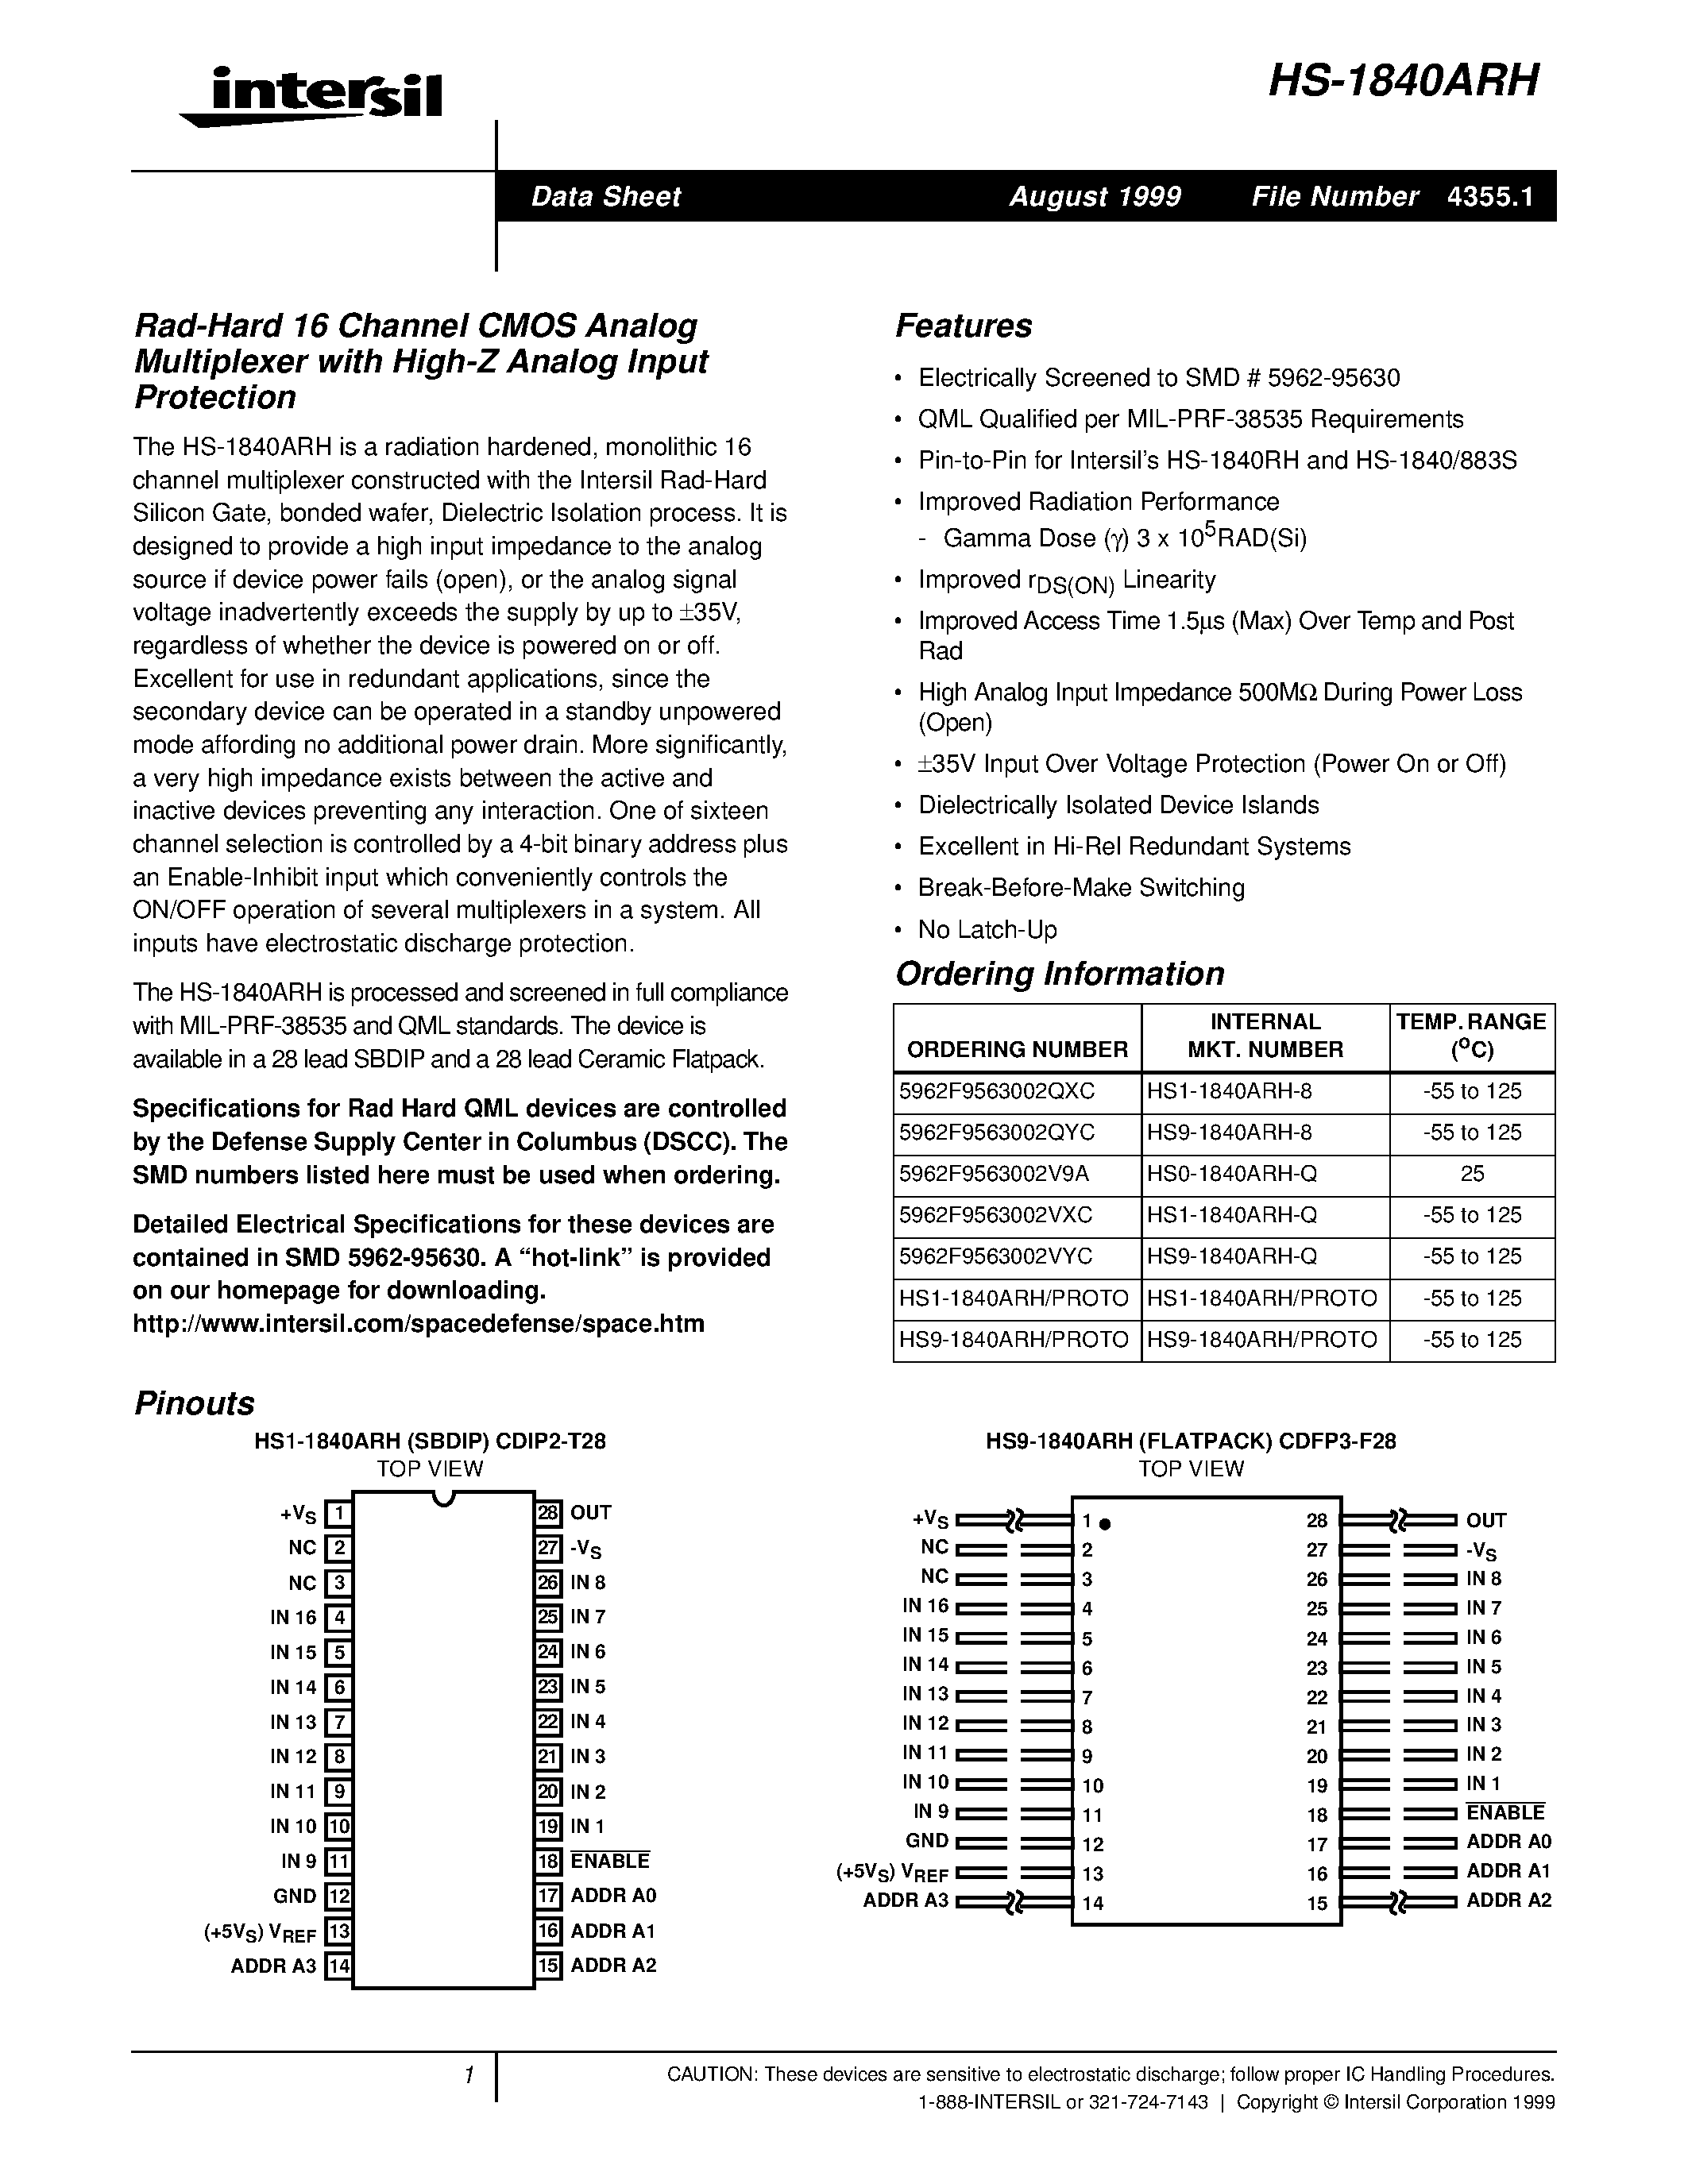 Даташит 5962F9563002VXC - Rad-Hard 16 Channel CMOS Analog Multiplexer with High-Z Analog Input Protection страница 1